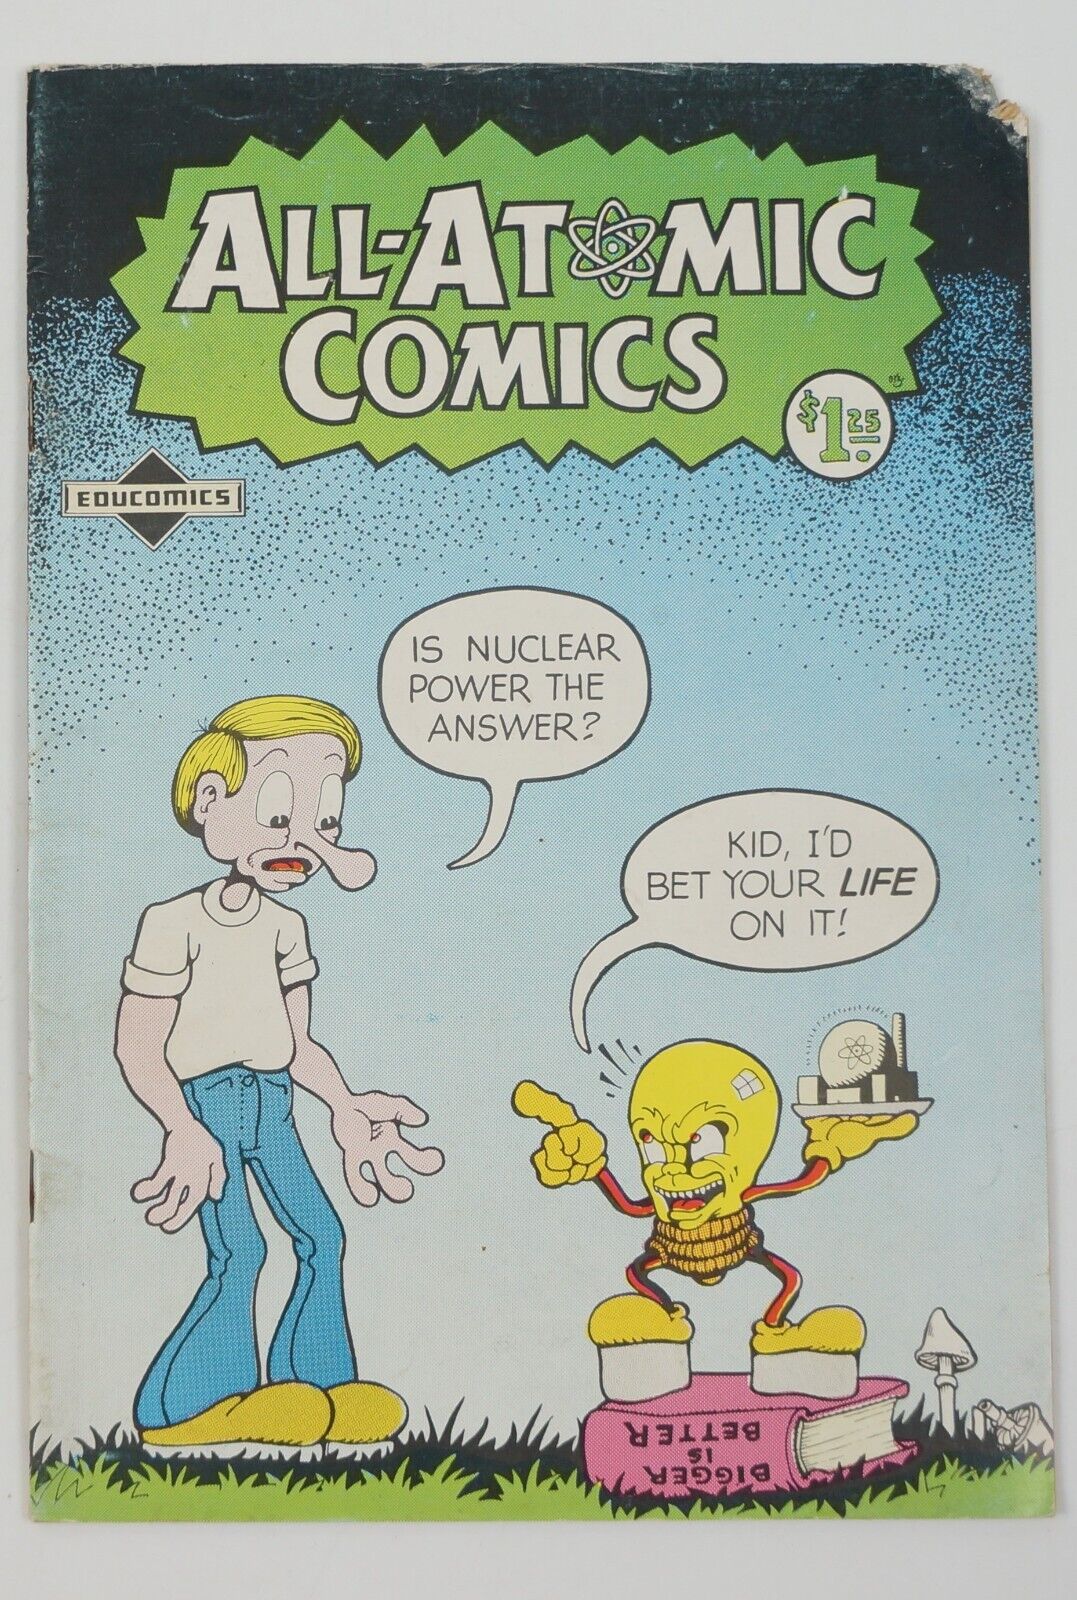 All Atomic Comics #1 rare educomics 5th printing underground comix